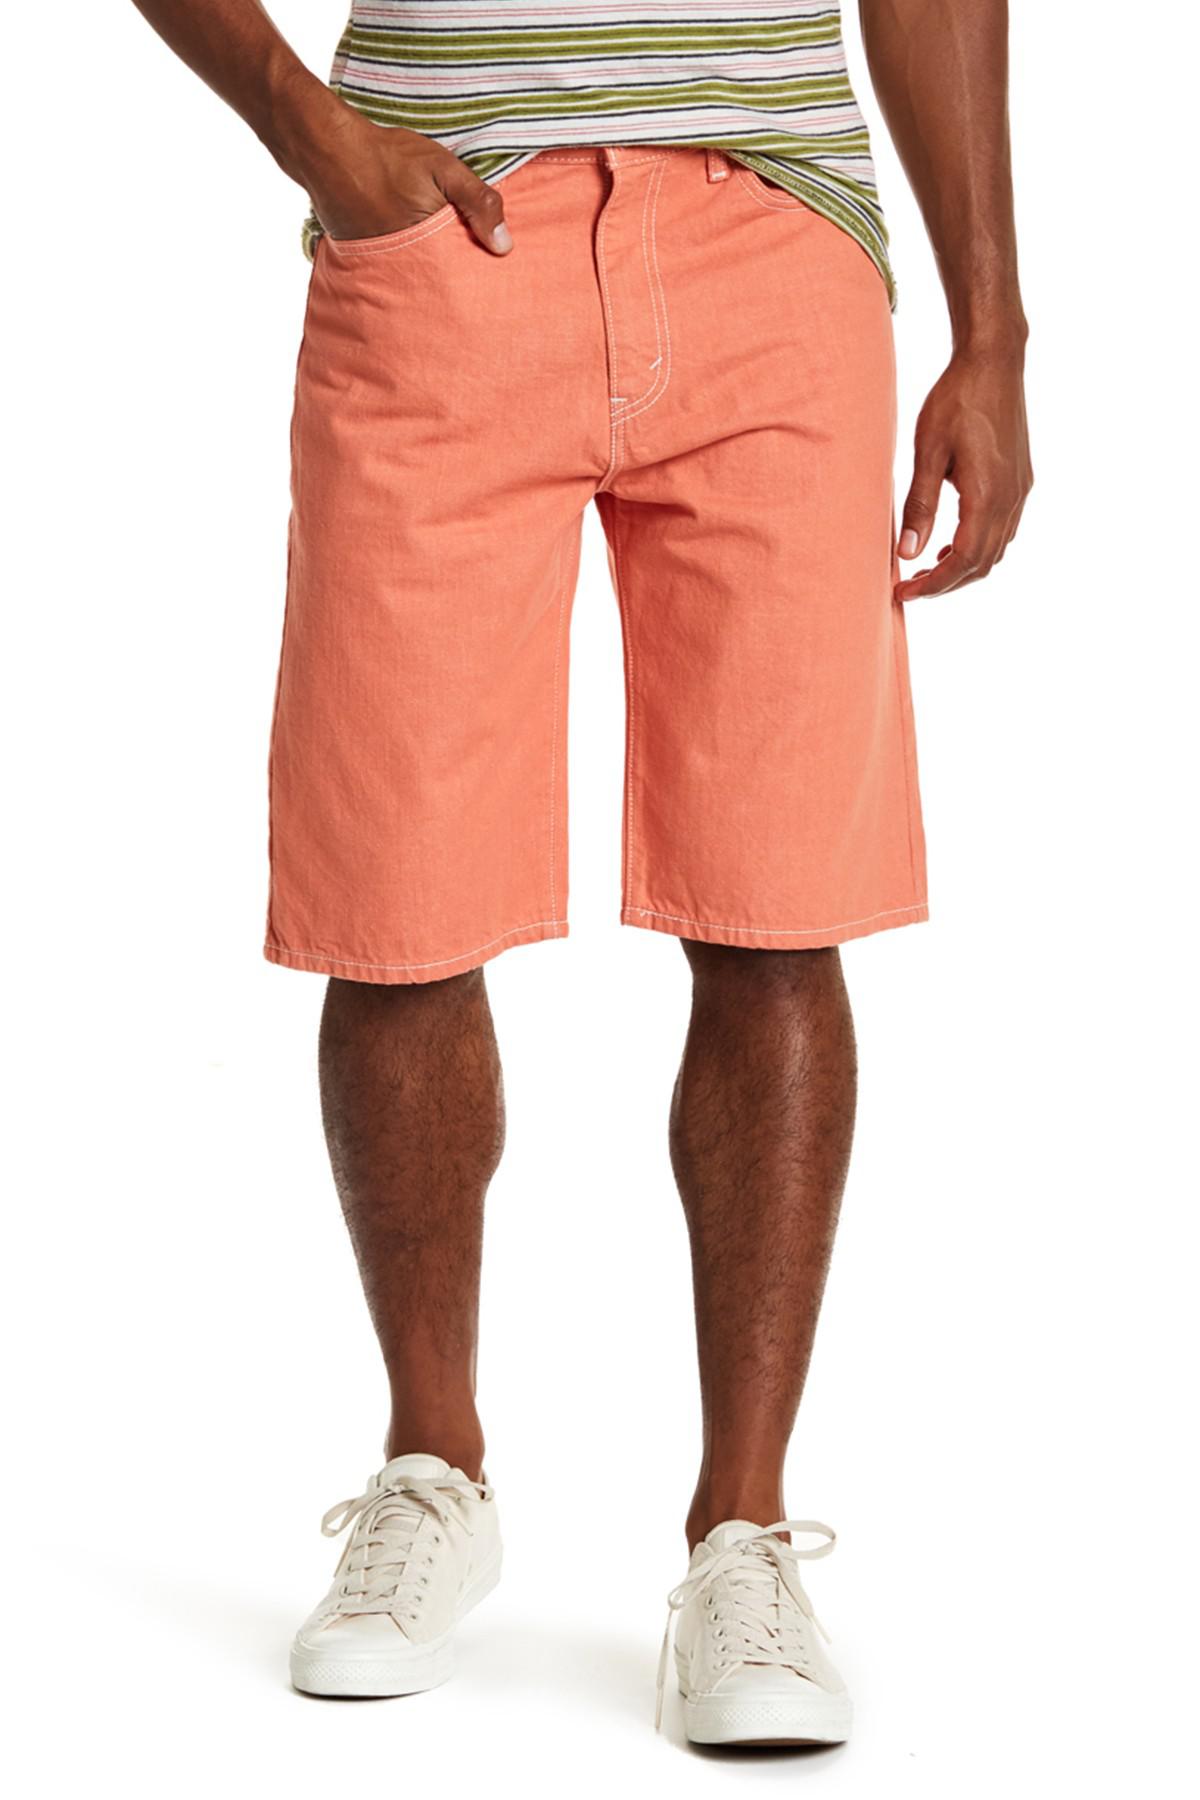 Levi's 569 5-pocket Denim Shorts in Orange for Men - Lyst